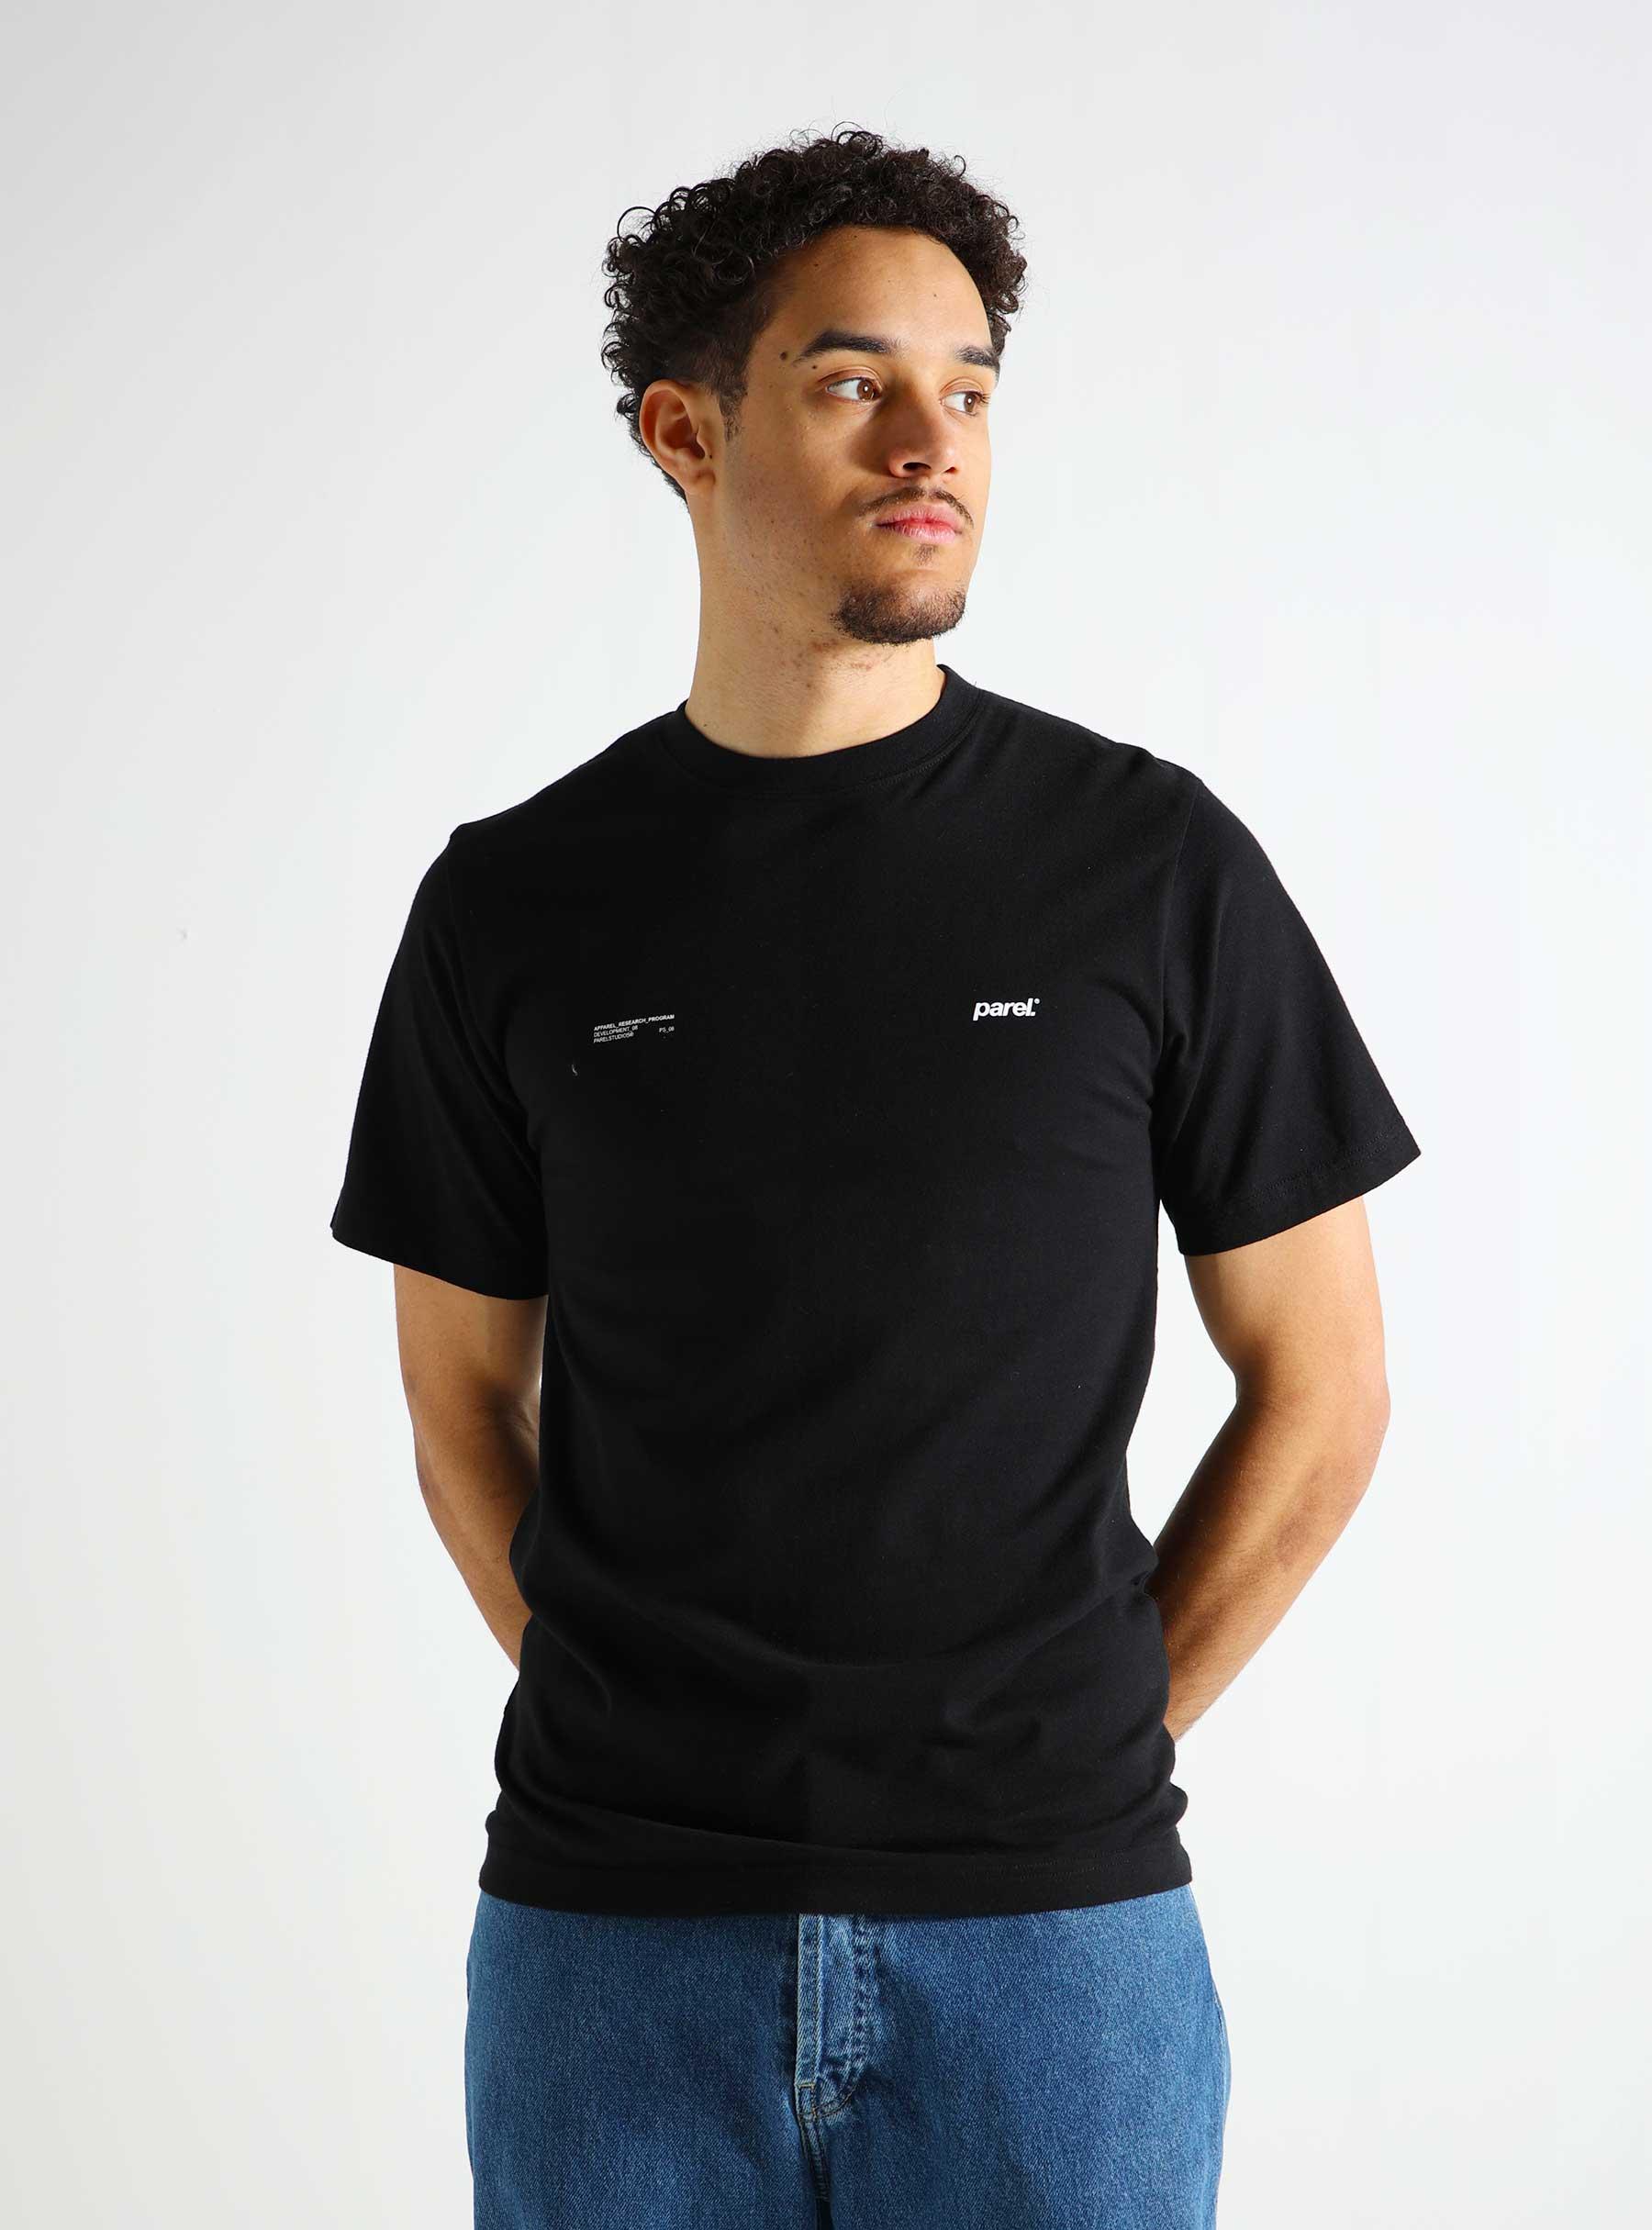 Classic BP T-Shirt Black parel_037